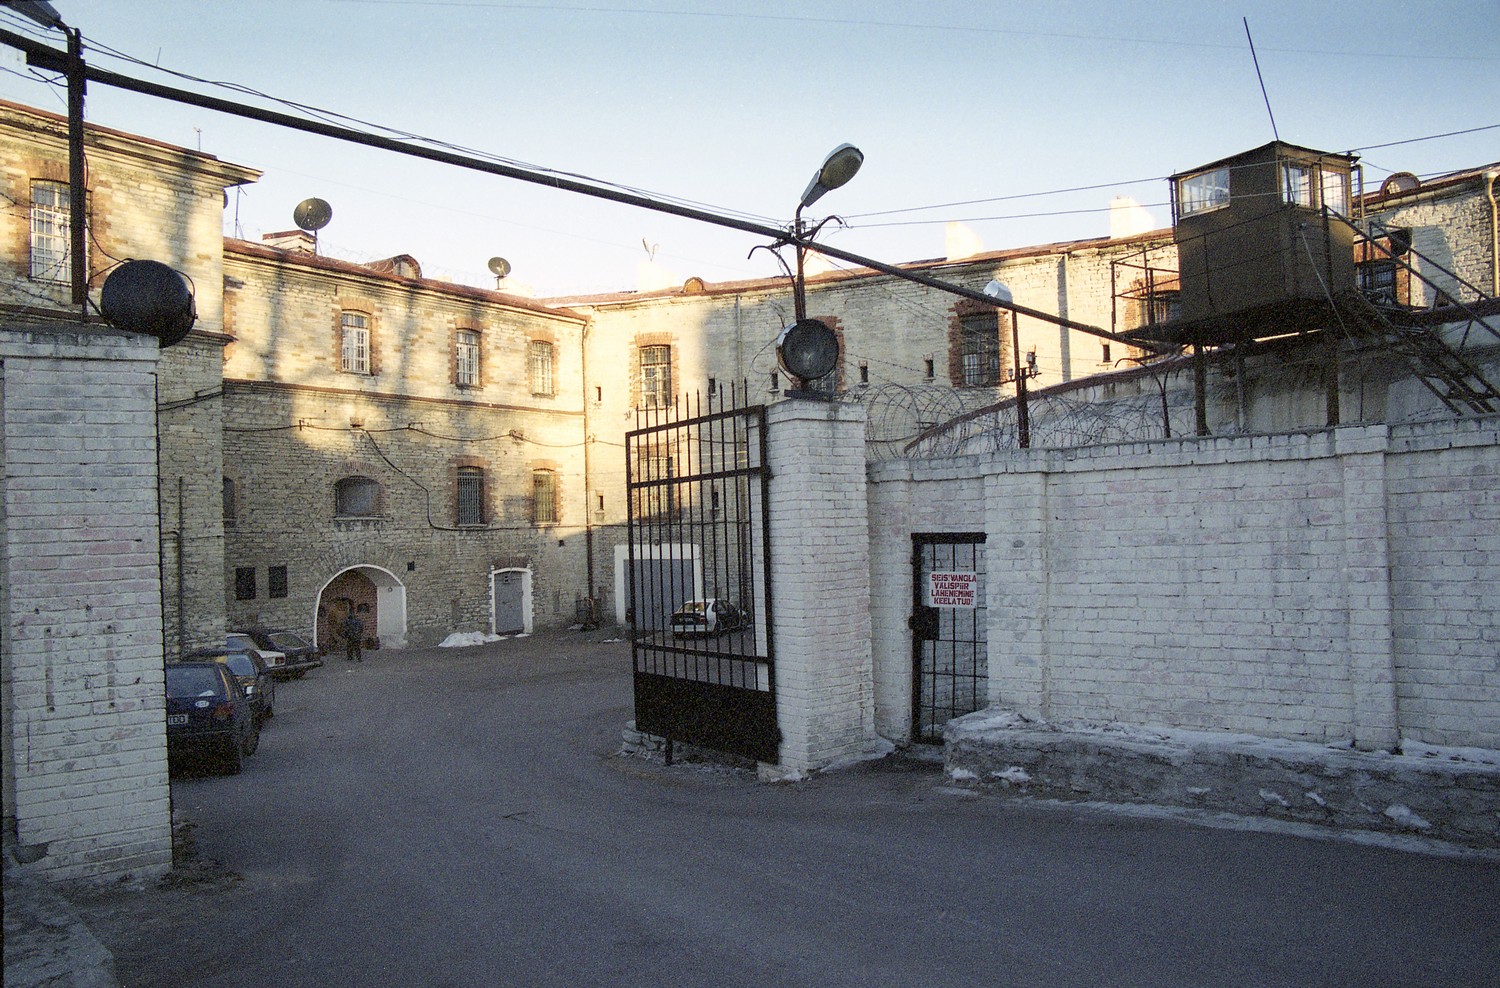 Battery prison 2002 (01)